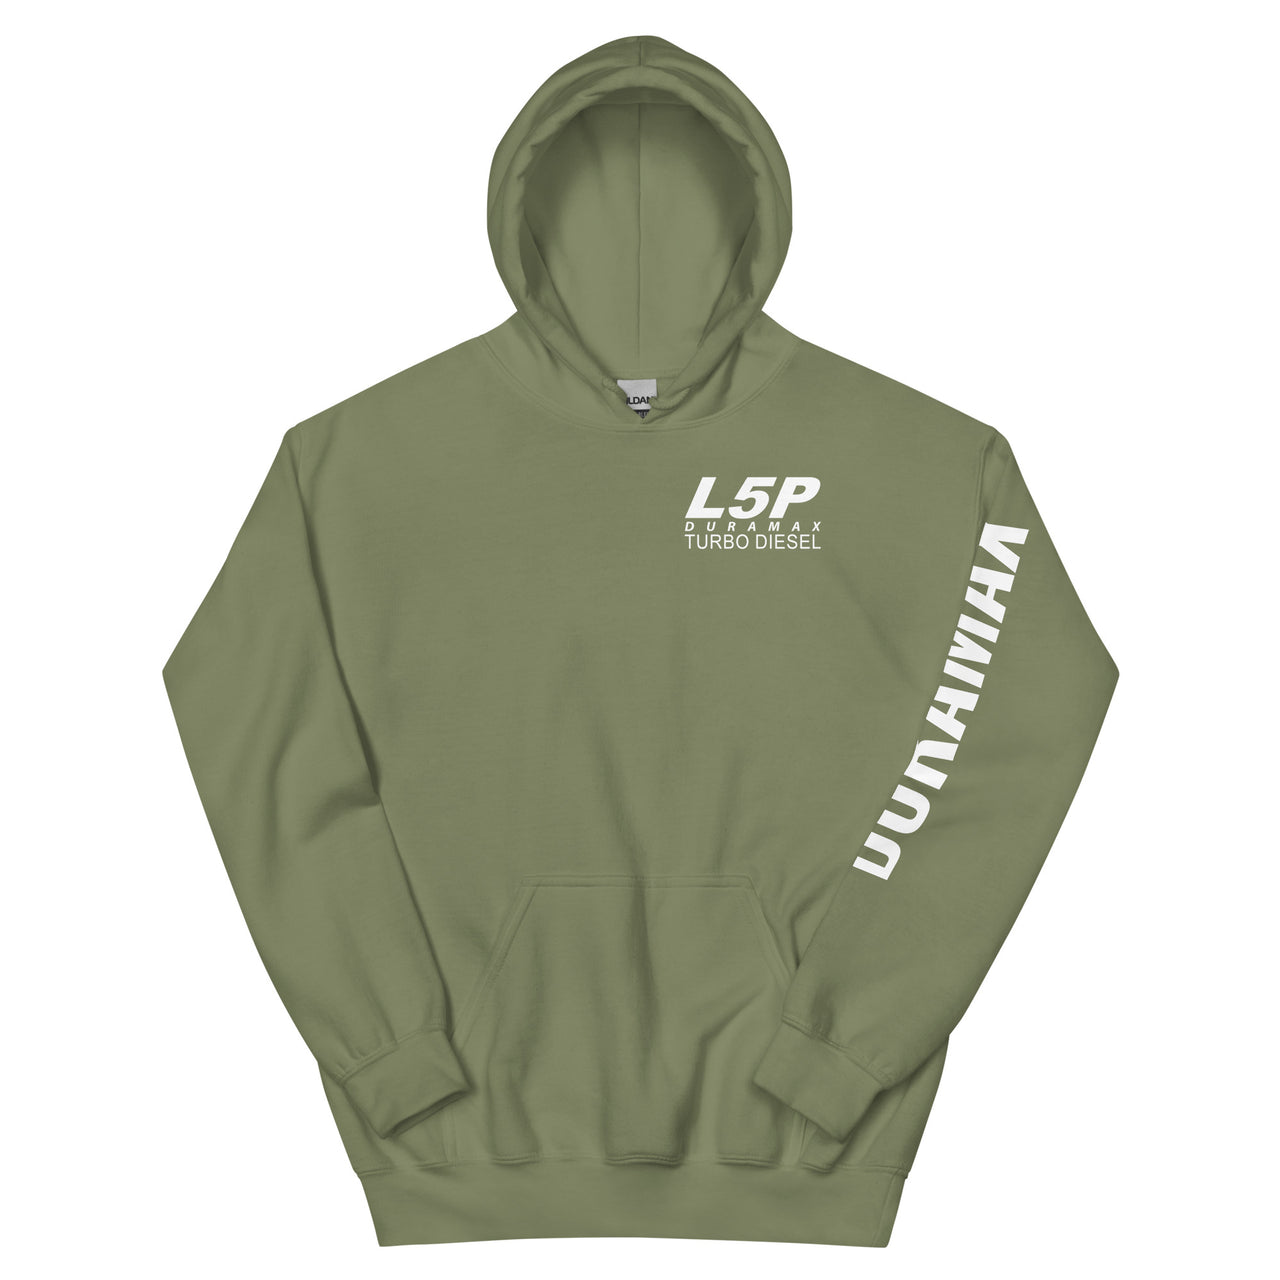 L5P Duramax Hoodie Pullover Sweatshirt With Sleeve Print - green